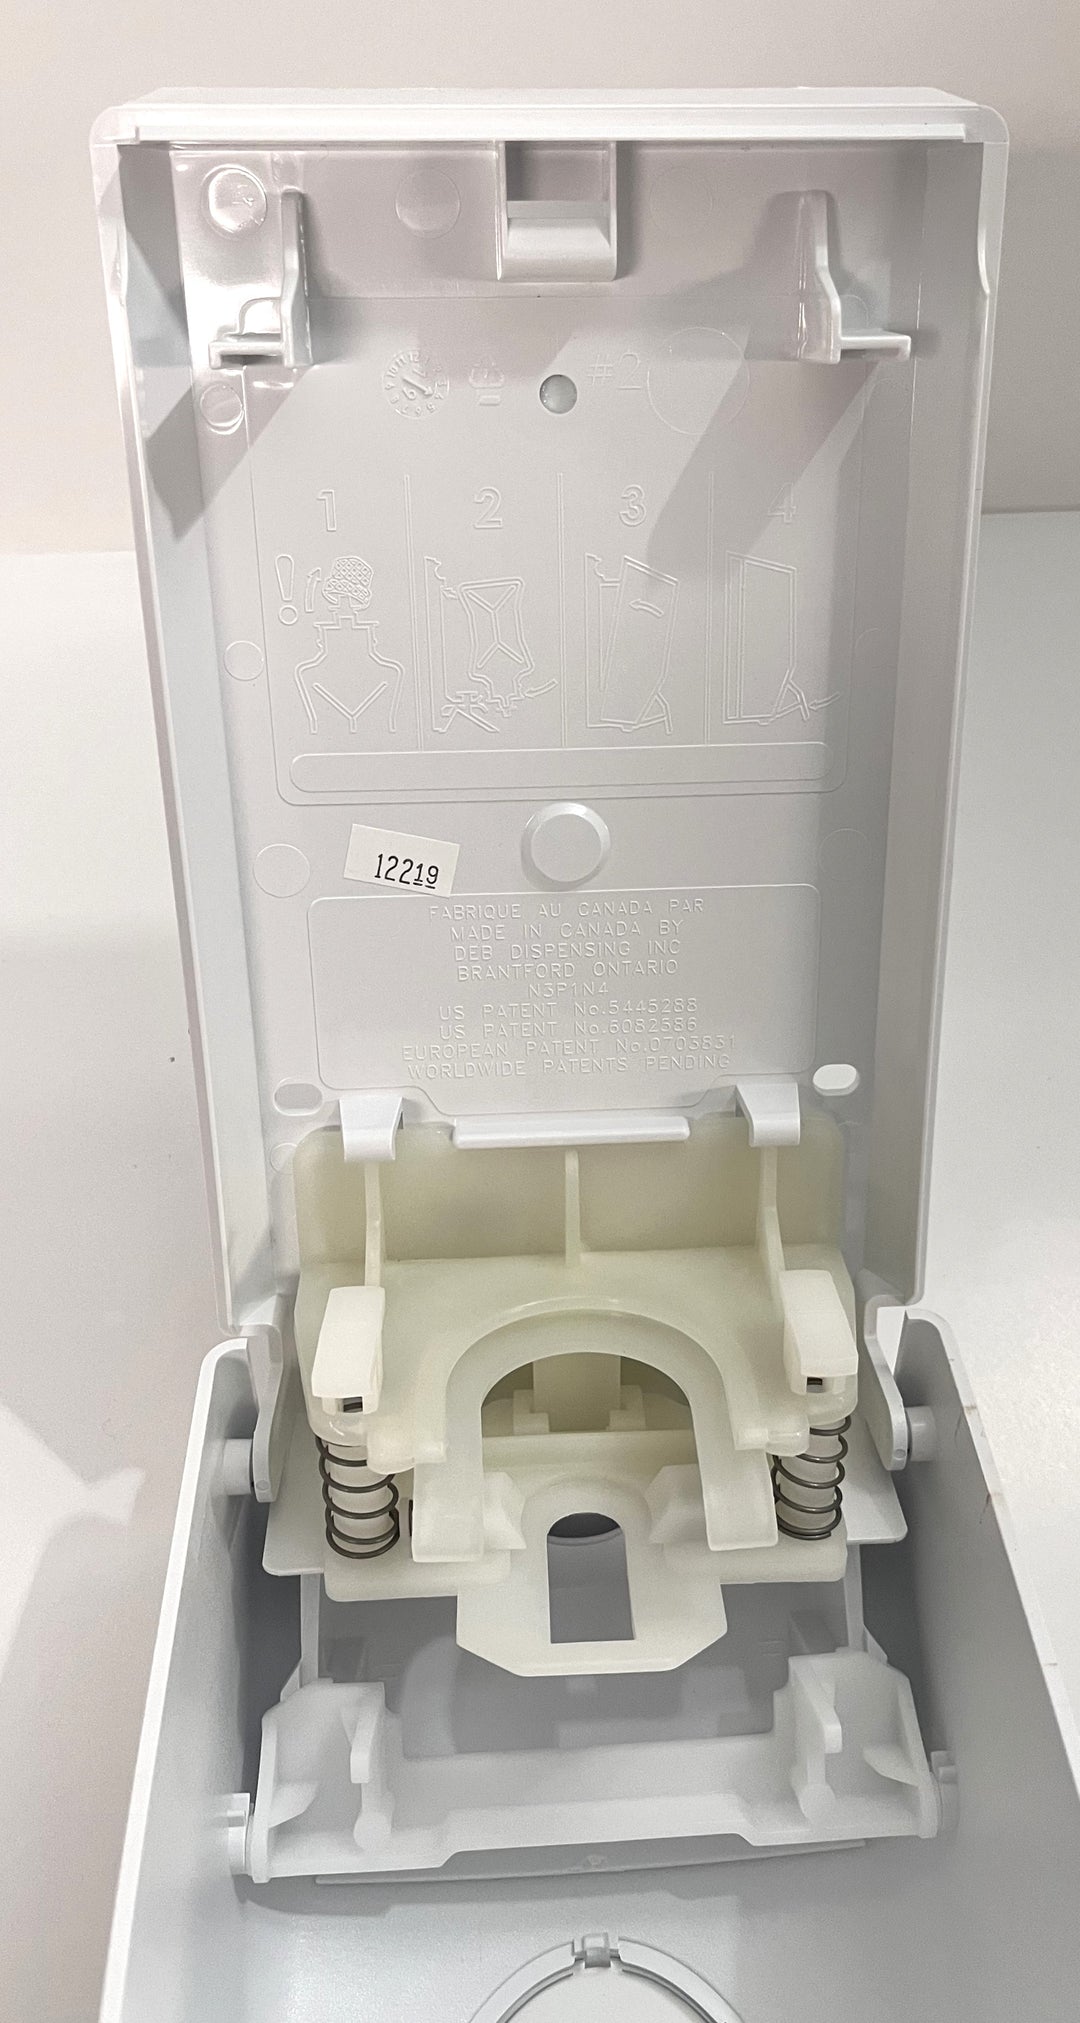 Deb White Curve 1 Liter Soap Dispenser